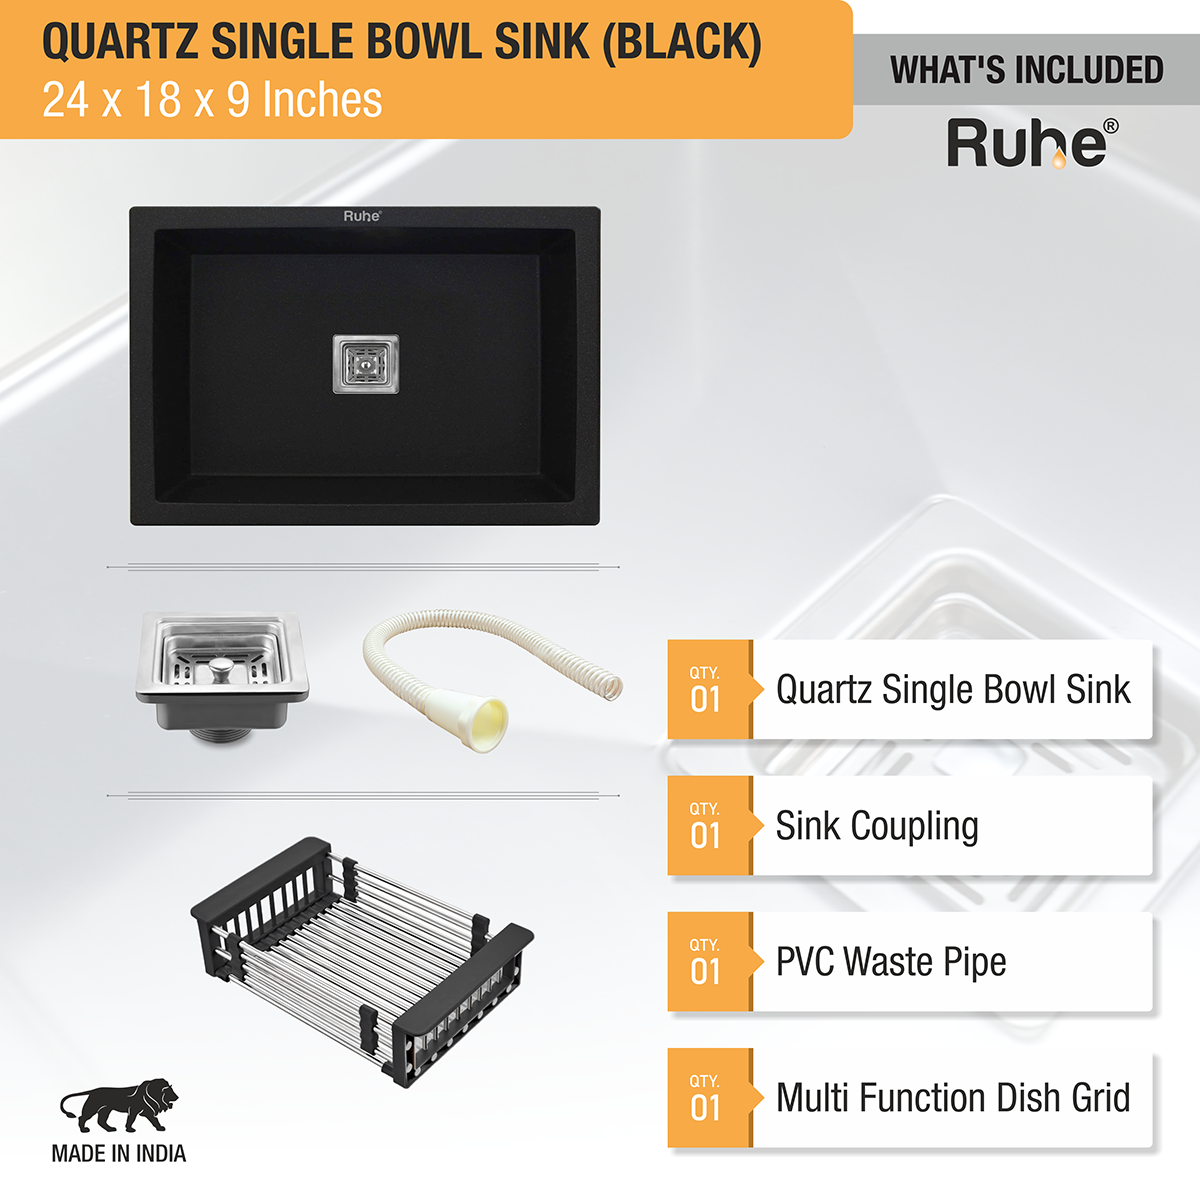 Quartz Black Single Bowl Kitchen Sink (24 x 18 x 9 inches) with accessories